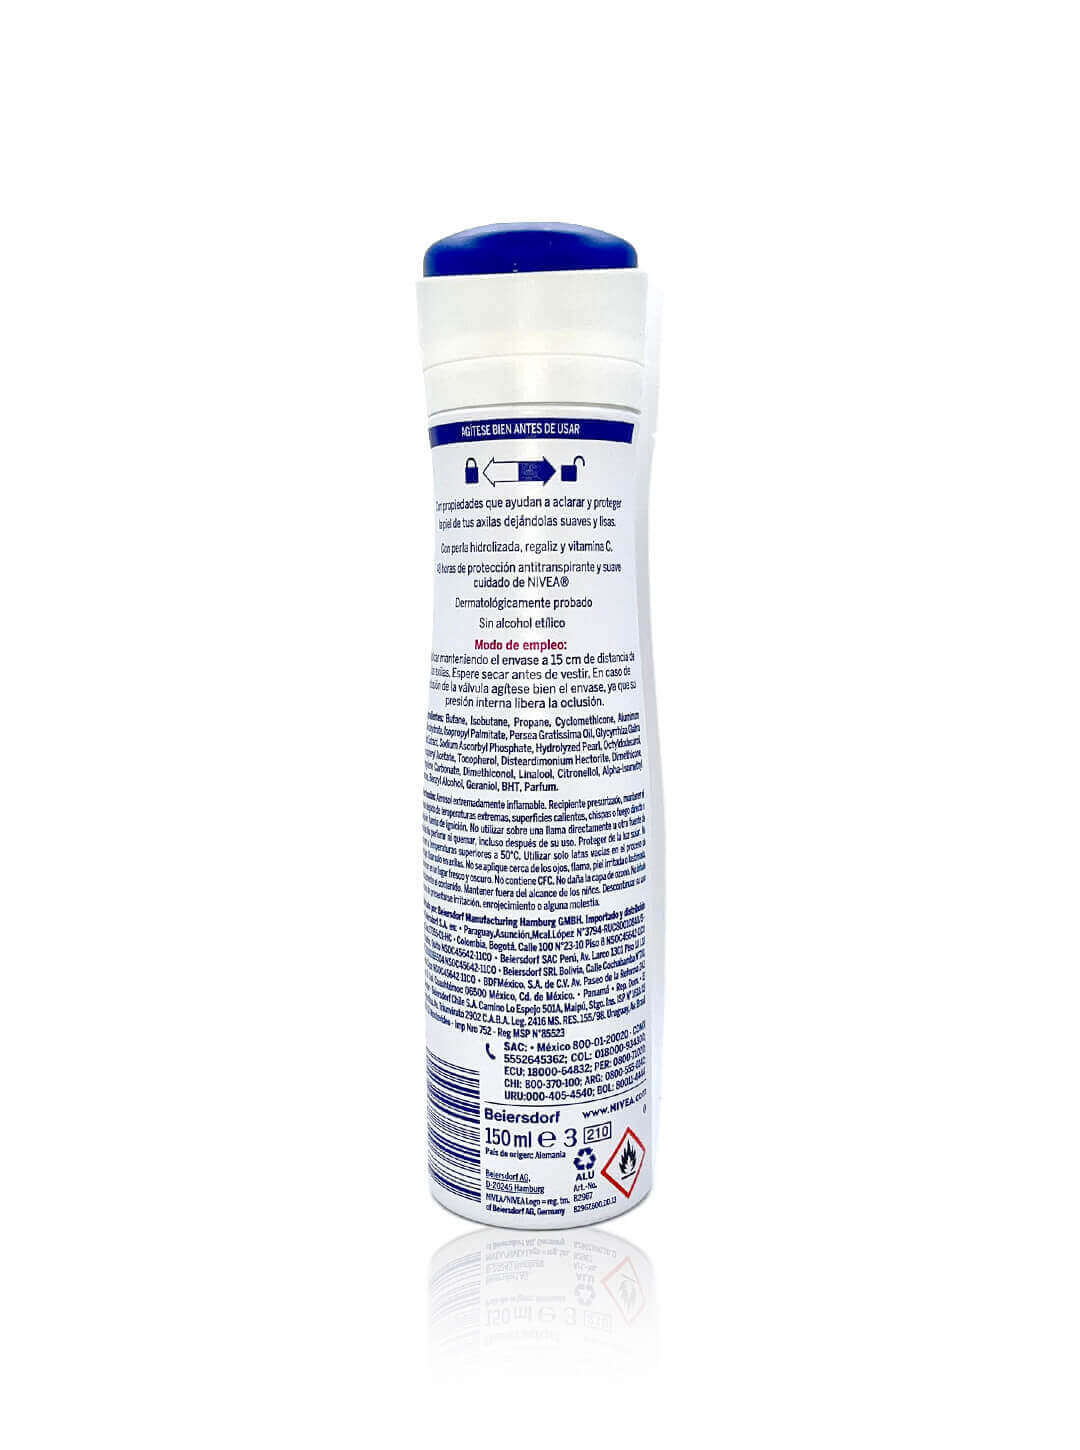 Desodorante Nivea Aclarado Natural Classic Spray 150ml.